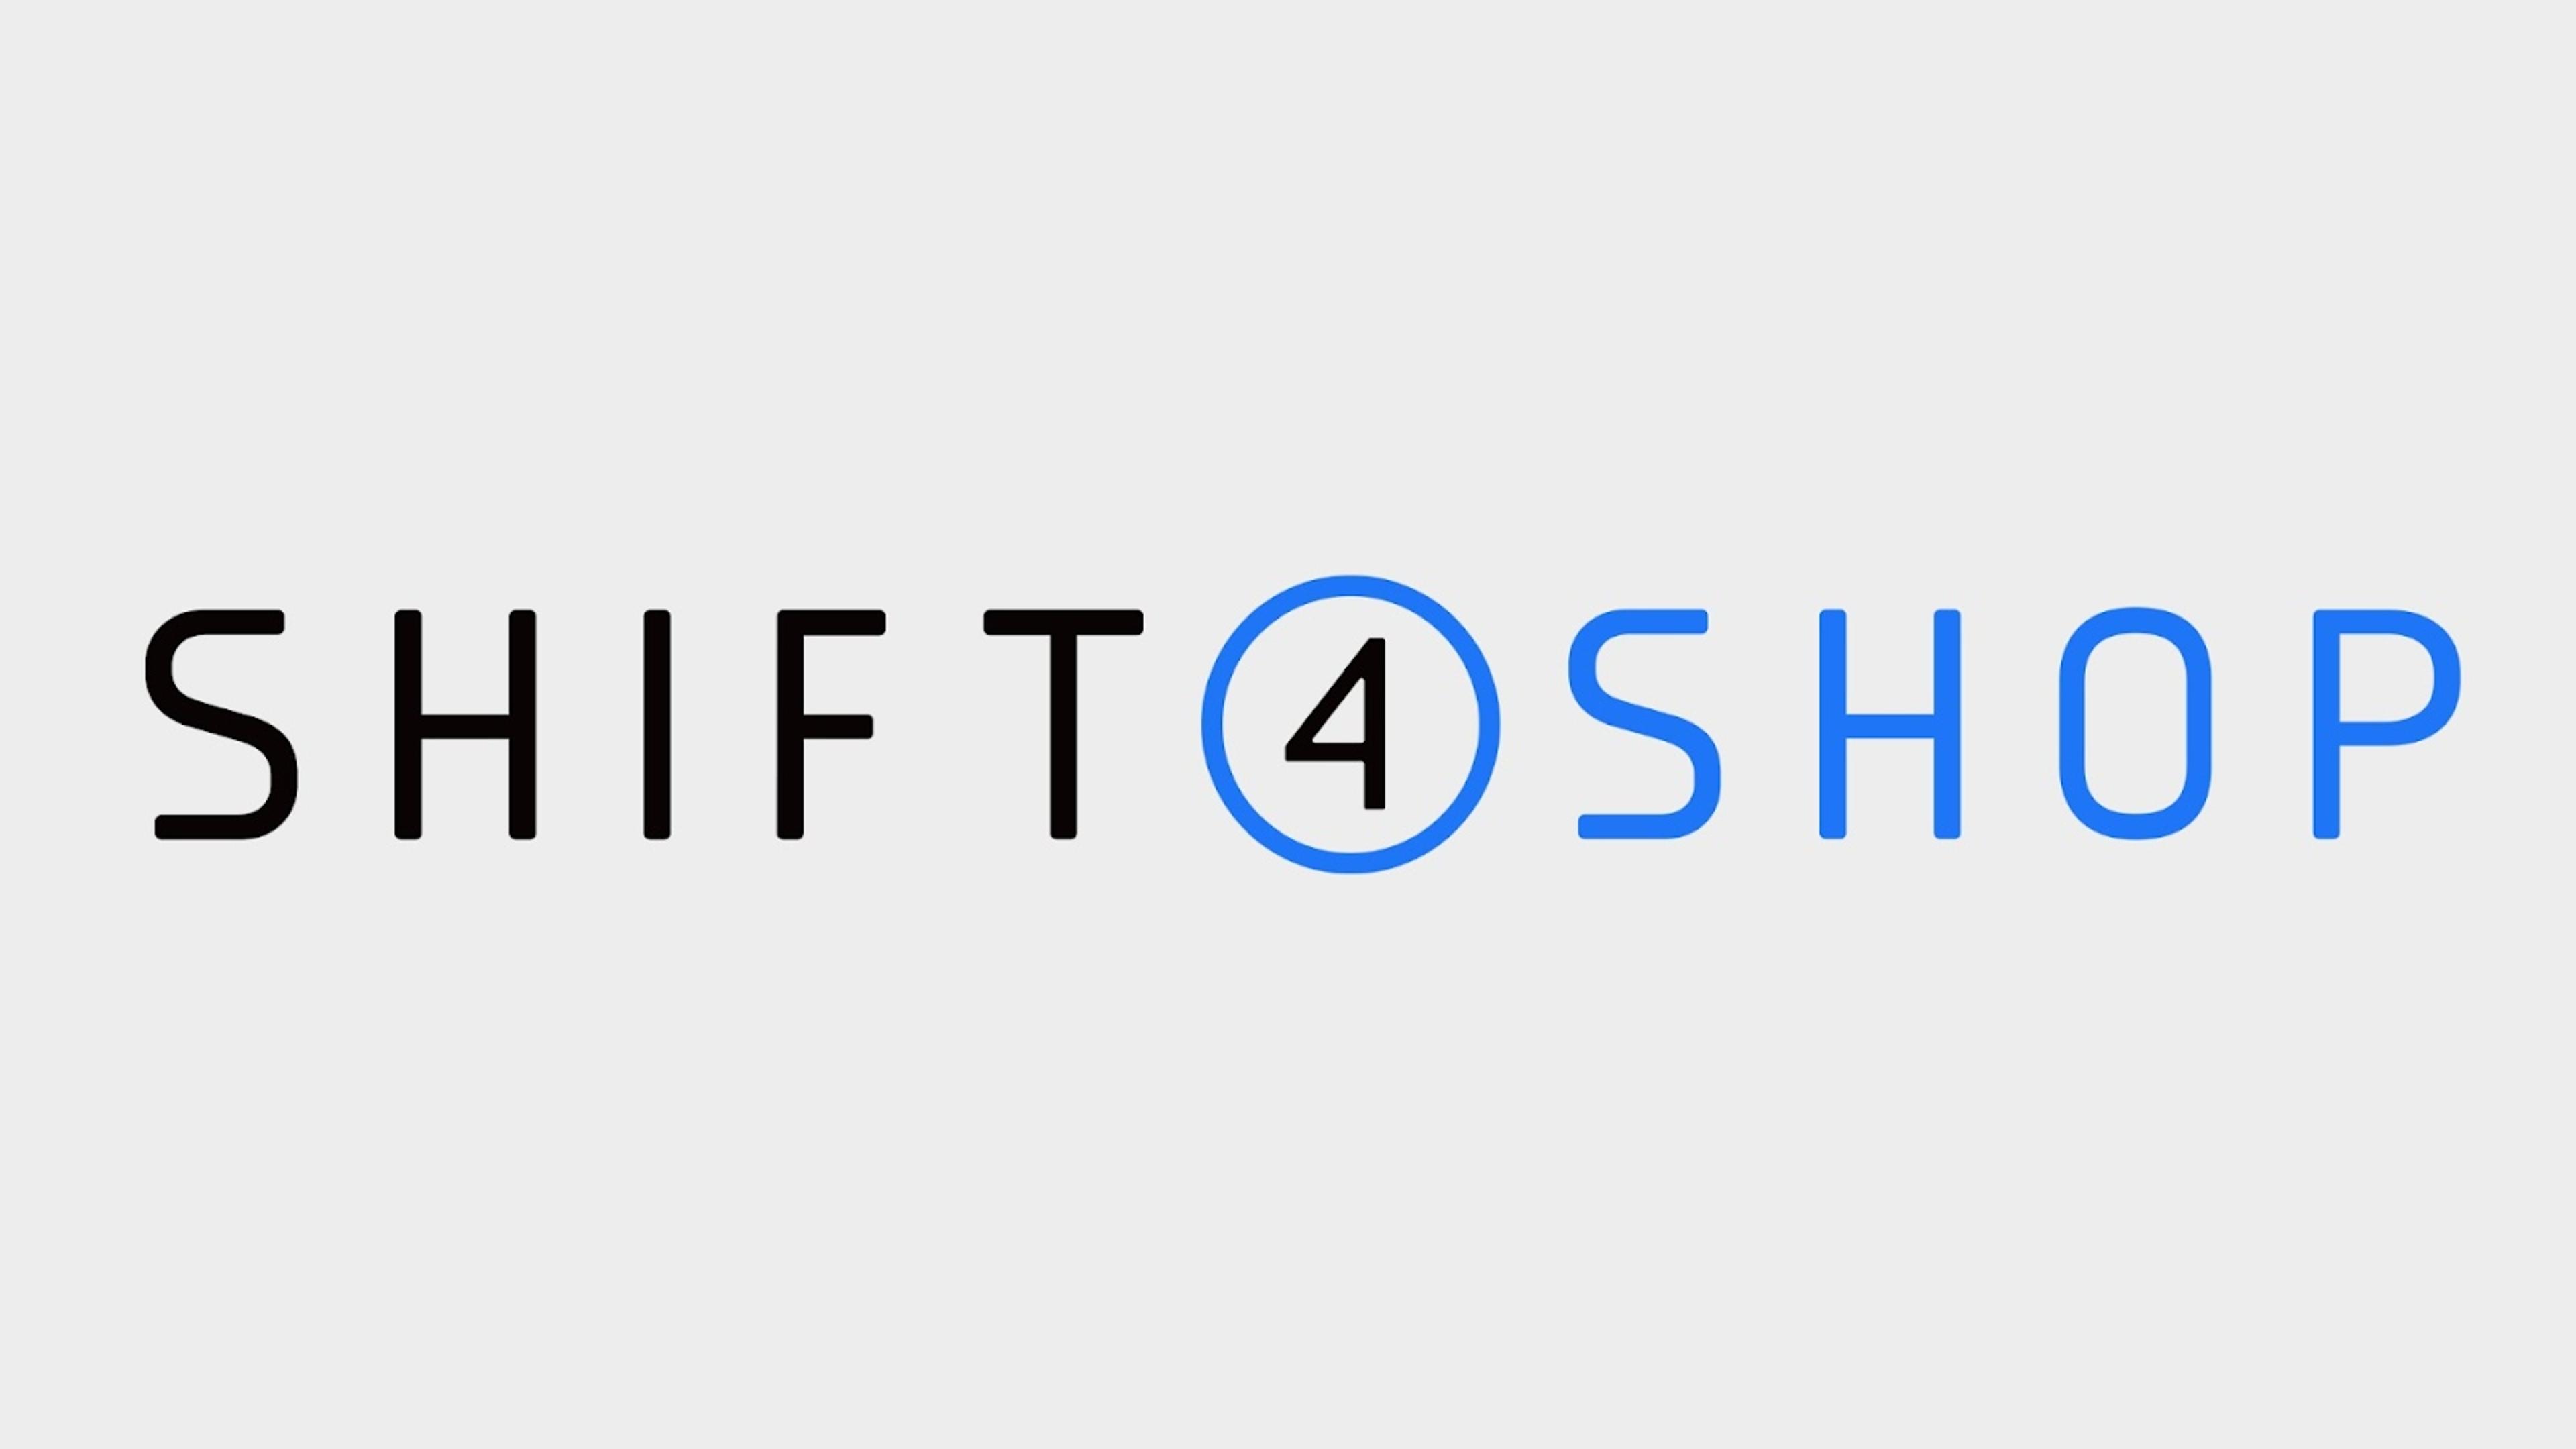 Shift4Shop Logo